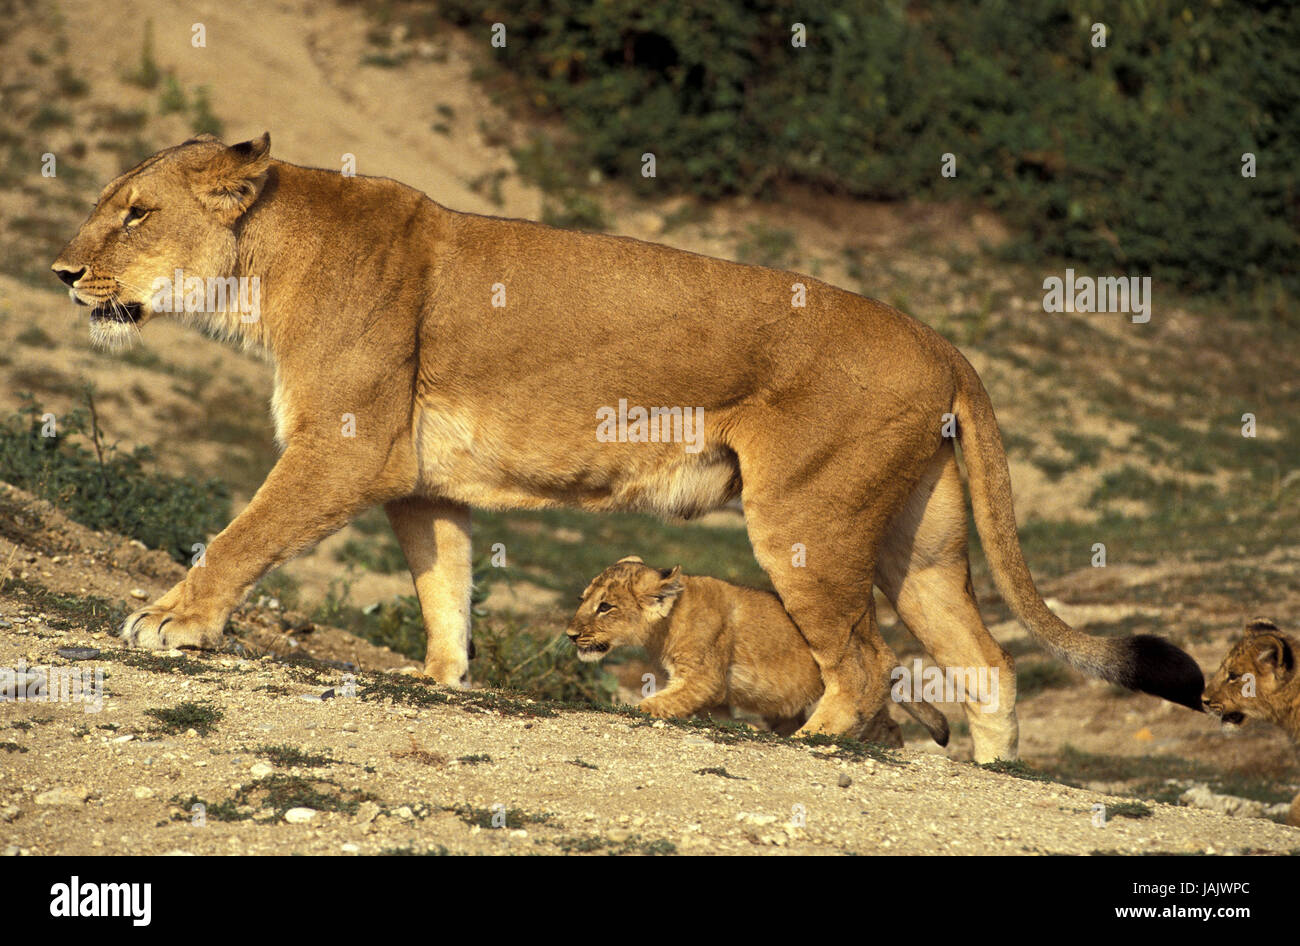 Lion,Panthera leo,femmine,con giovane animale, Foto Stock